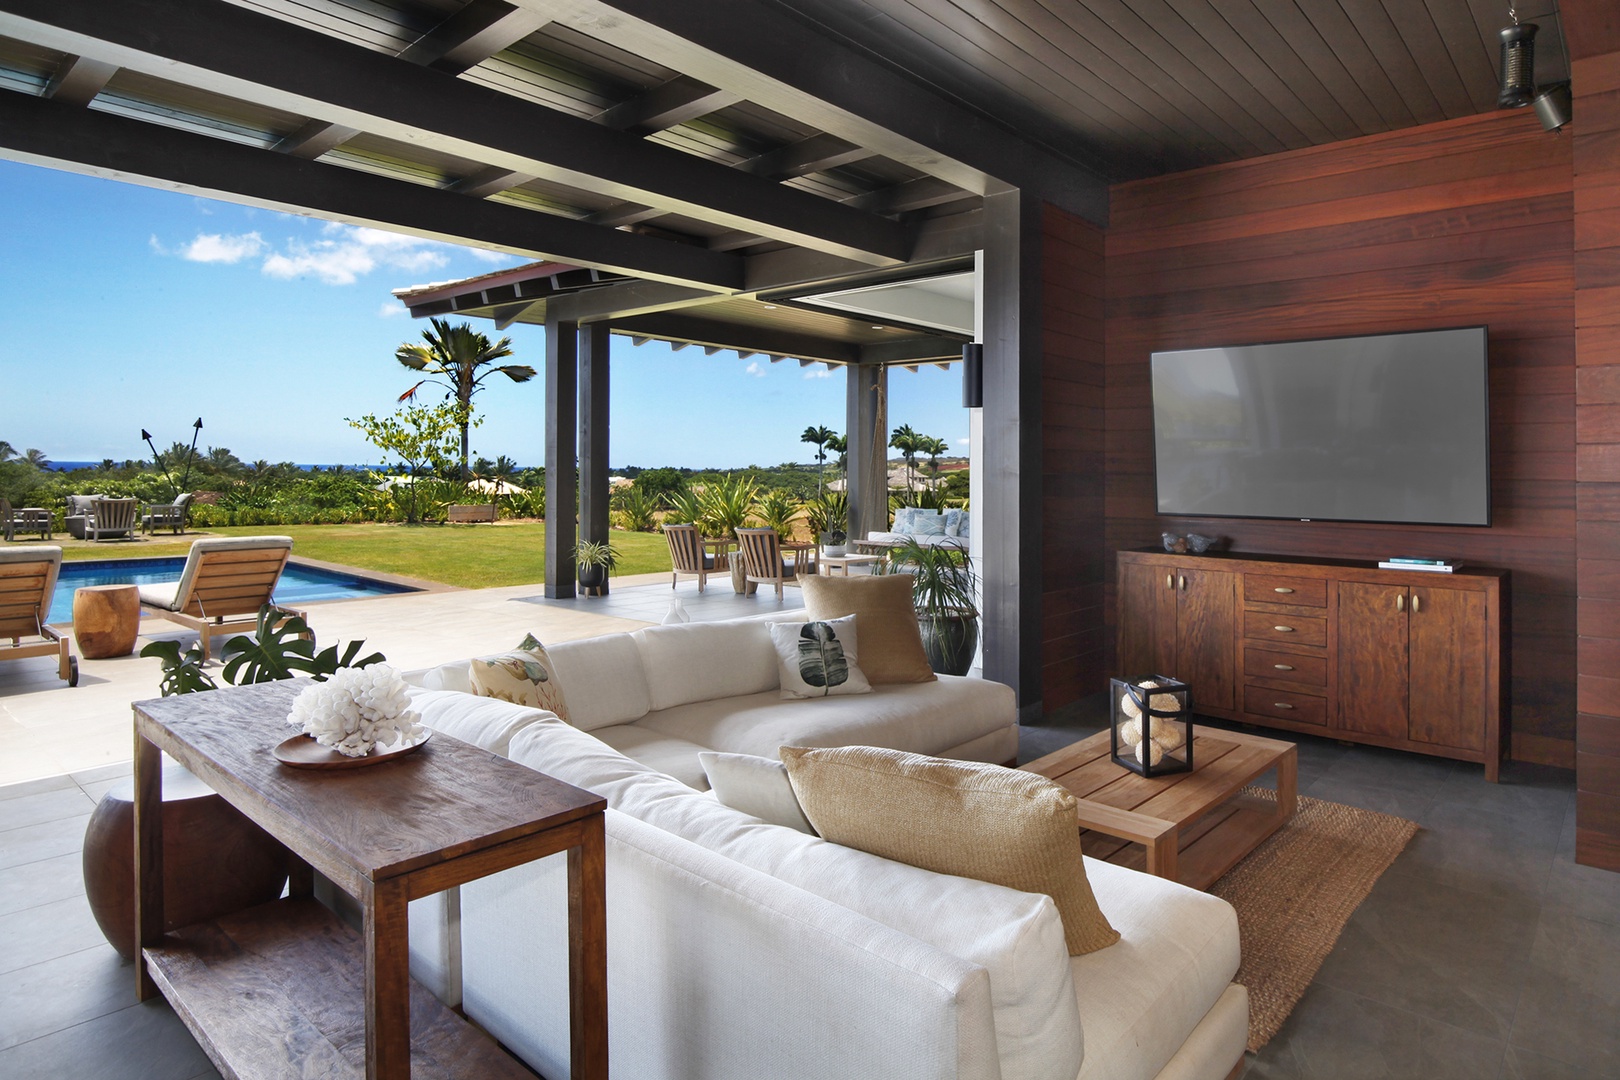 Koloa Vacation Rentals, Hale Pomaika'i Mau - Outdoor living space and pool with ocean views